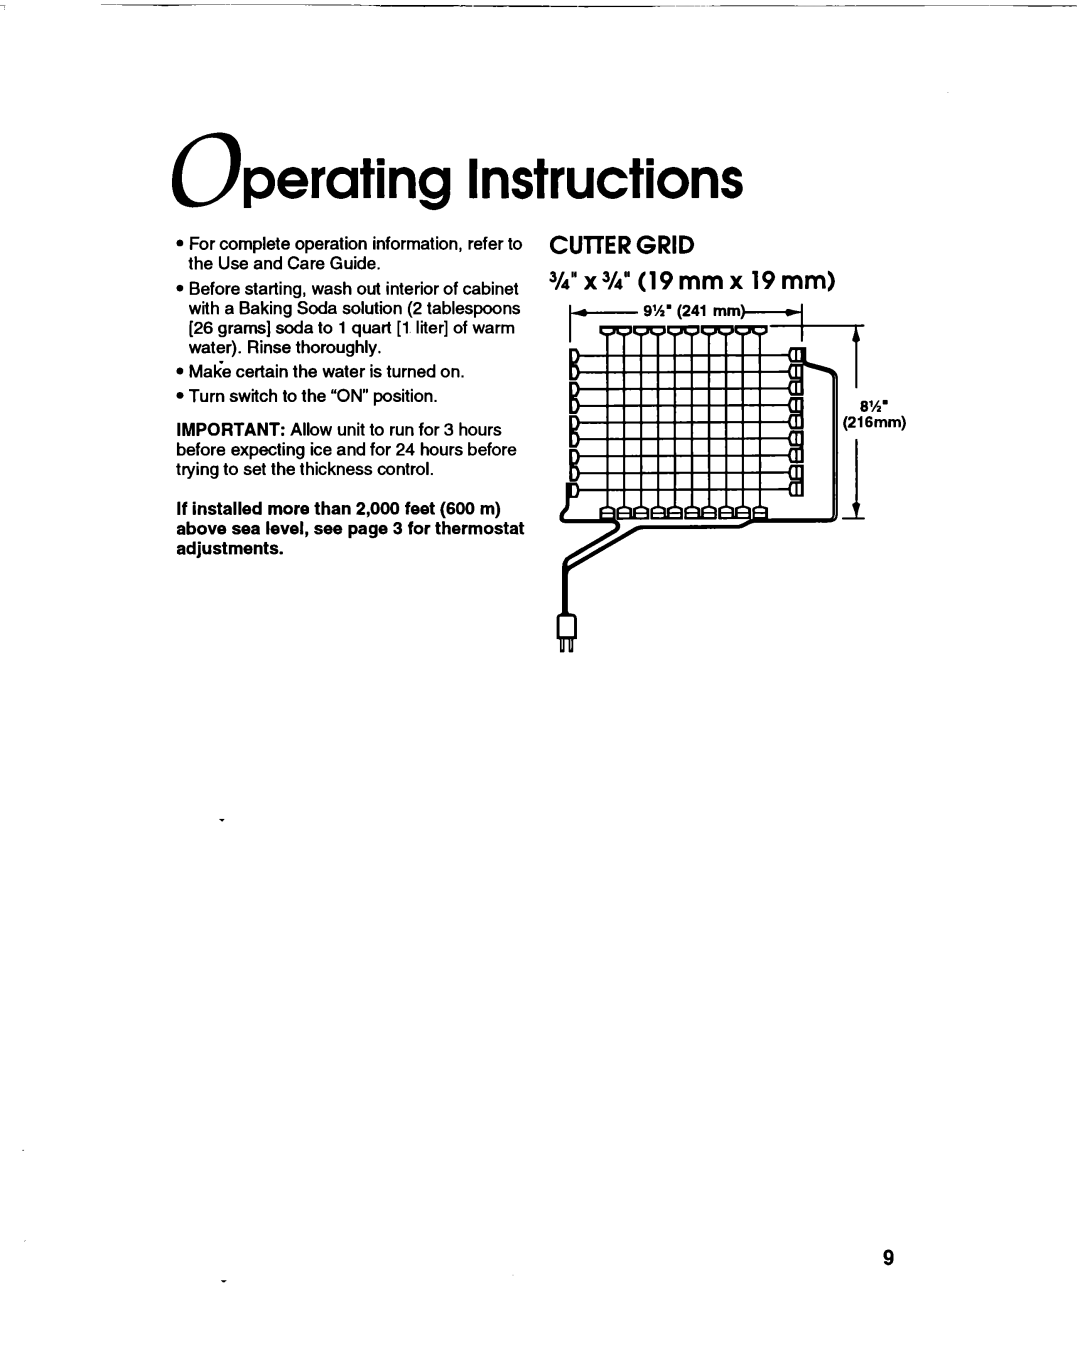 KitchenAid KULSL85 installation instructions perating Instructions, CUllER GRID Vi” x?h” 19 mm x 19 mm 